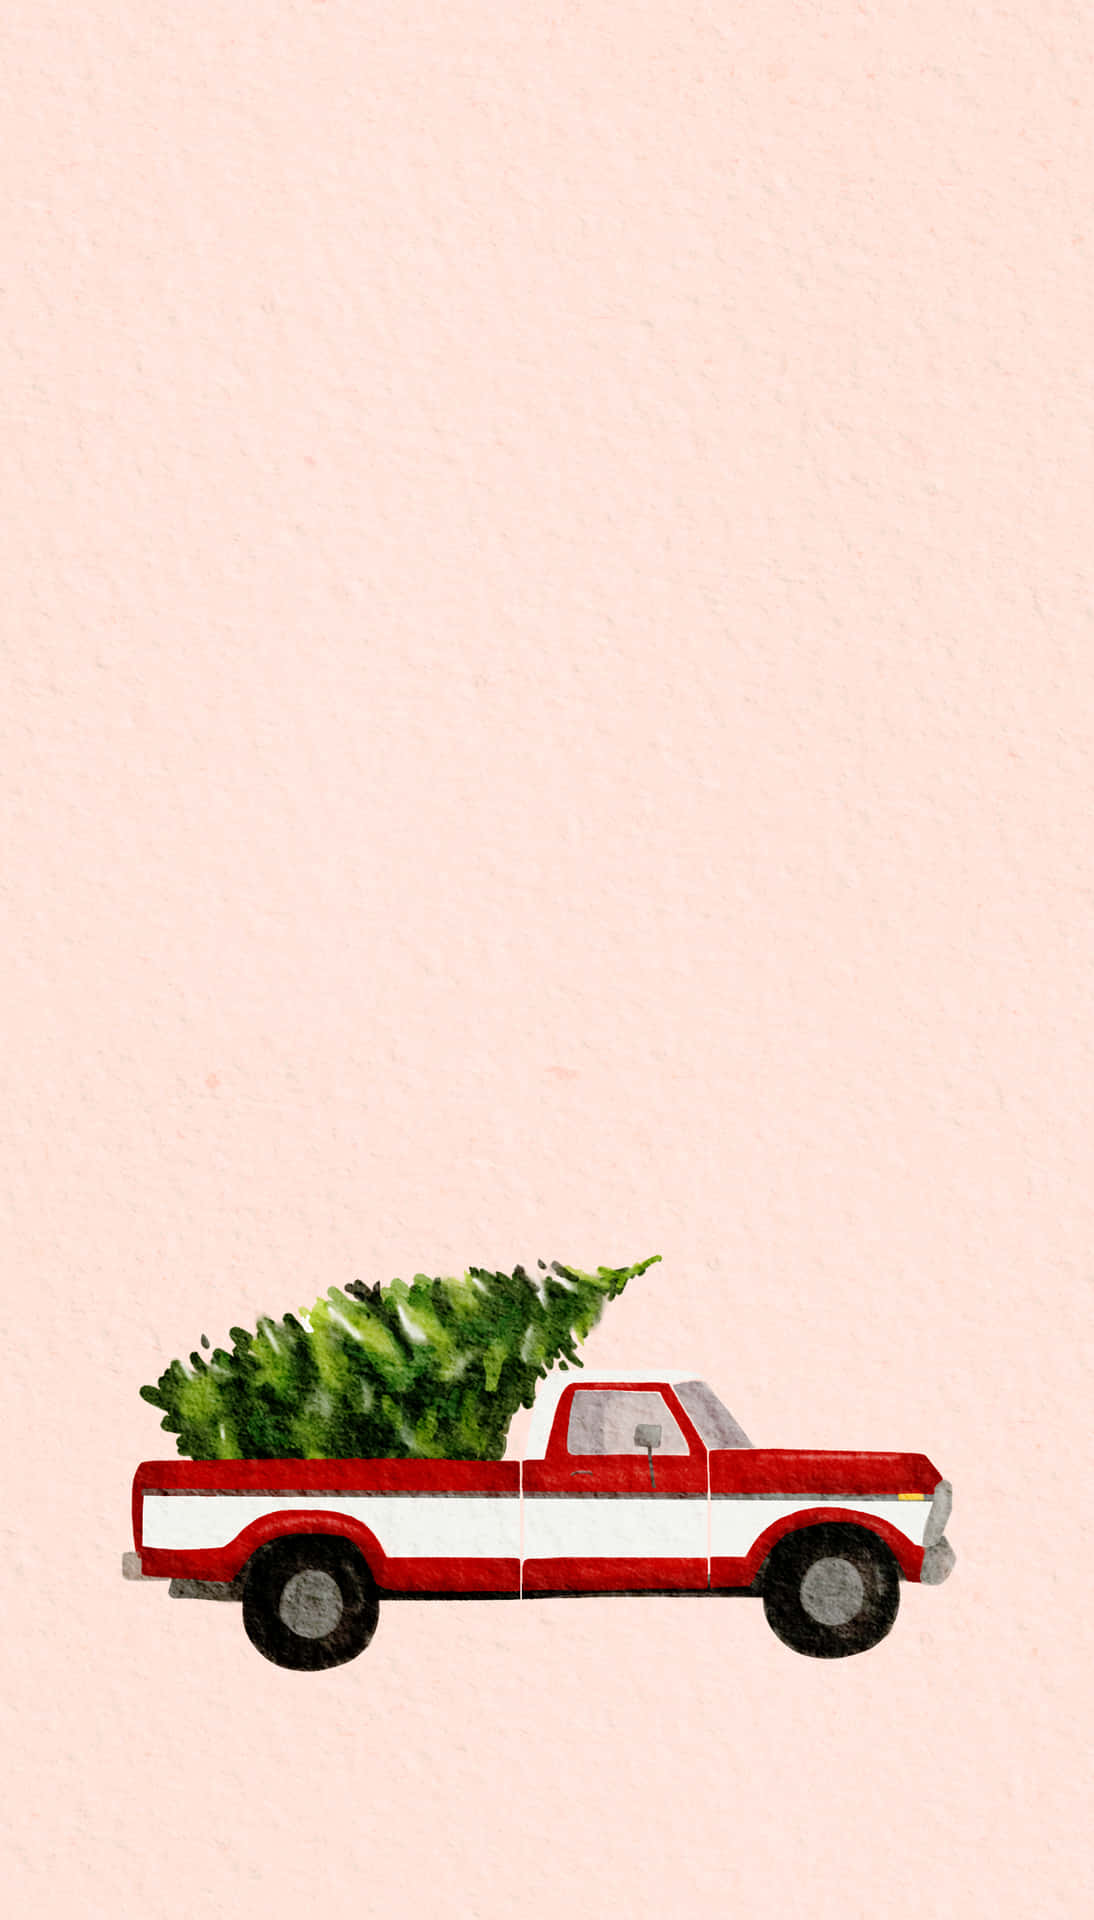 En gammel mønstret jul med et vintage lastbil scenarie Wallpaper